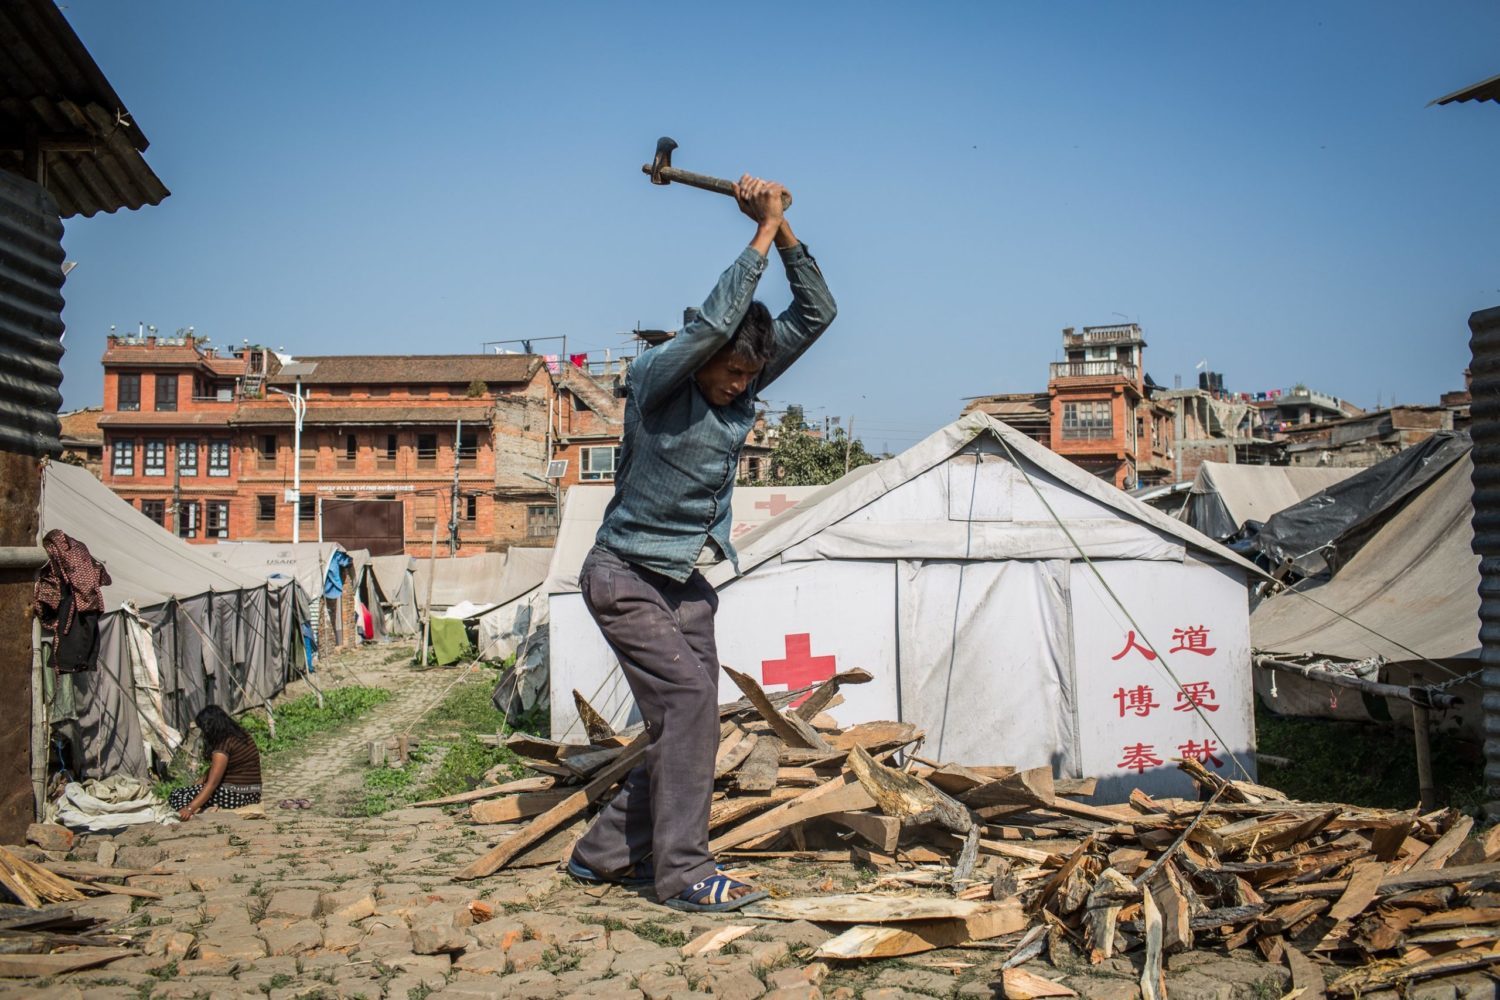 Bik Bahadur Shahi, an earthquake victim from Bhaktapur, chops firewood at a temporary camp where he and his family are still living.